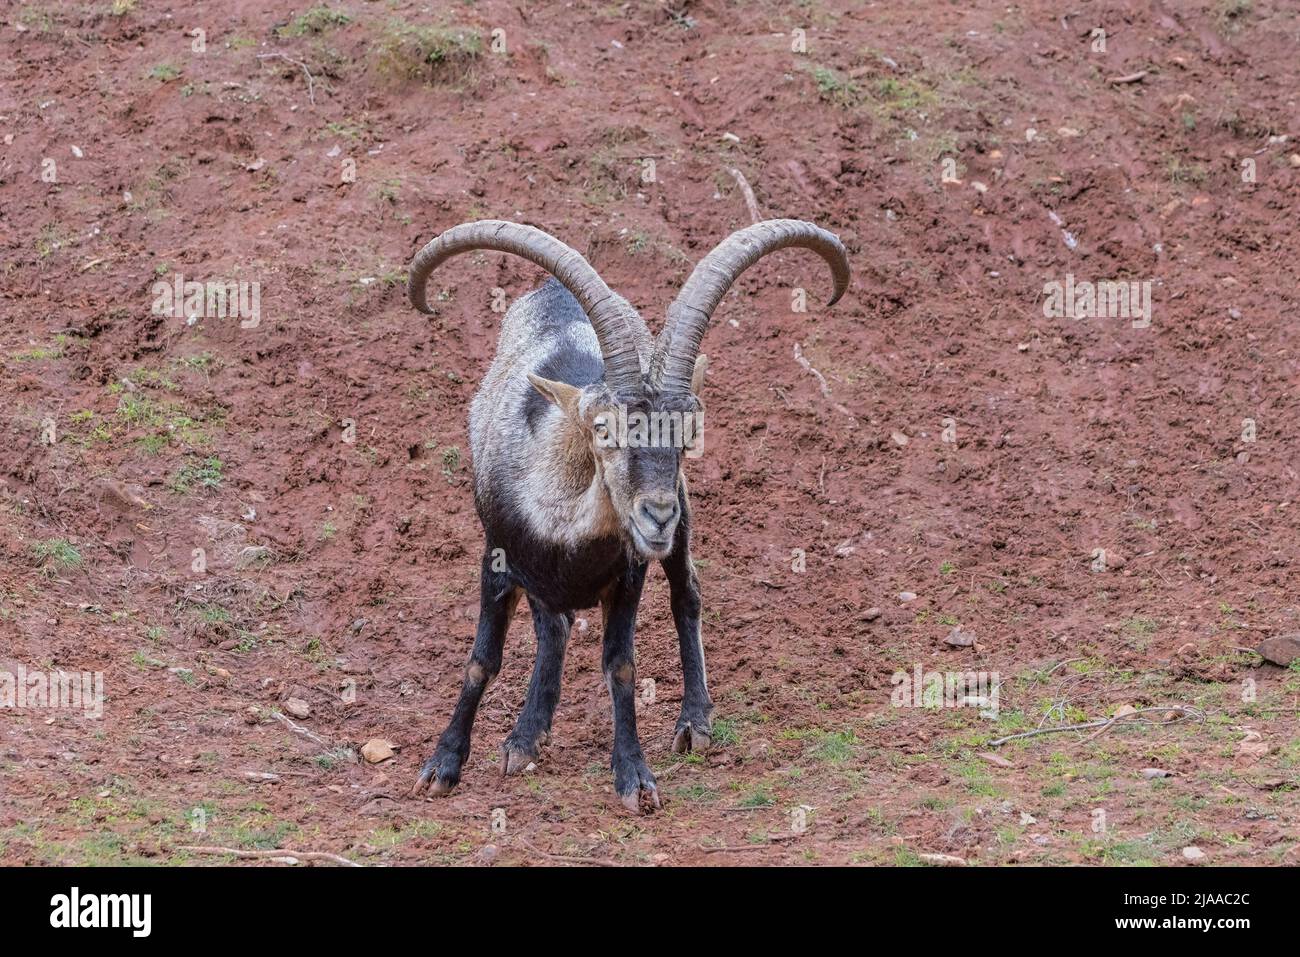 Ibex ibérico (Capra pyrenaica), también conocido como Cabra Hispanica, Cabra Montes, Ibex español, cabra salvaje española o cabra salvaje ibérica. Fotografiado Foto de stock